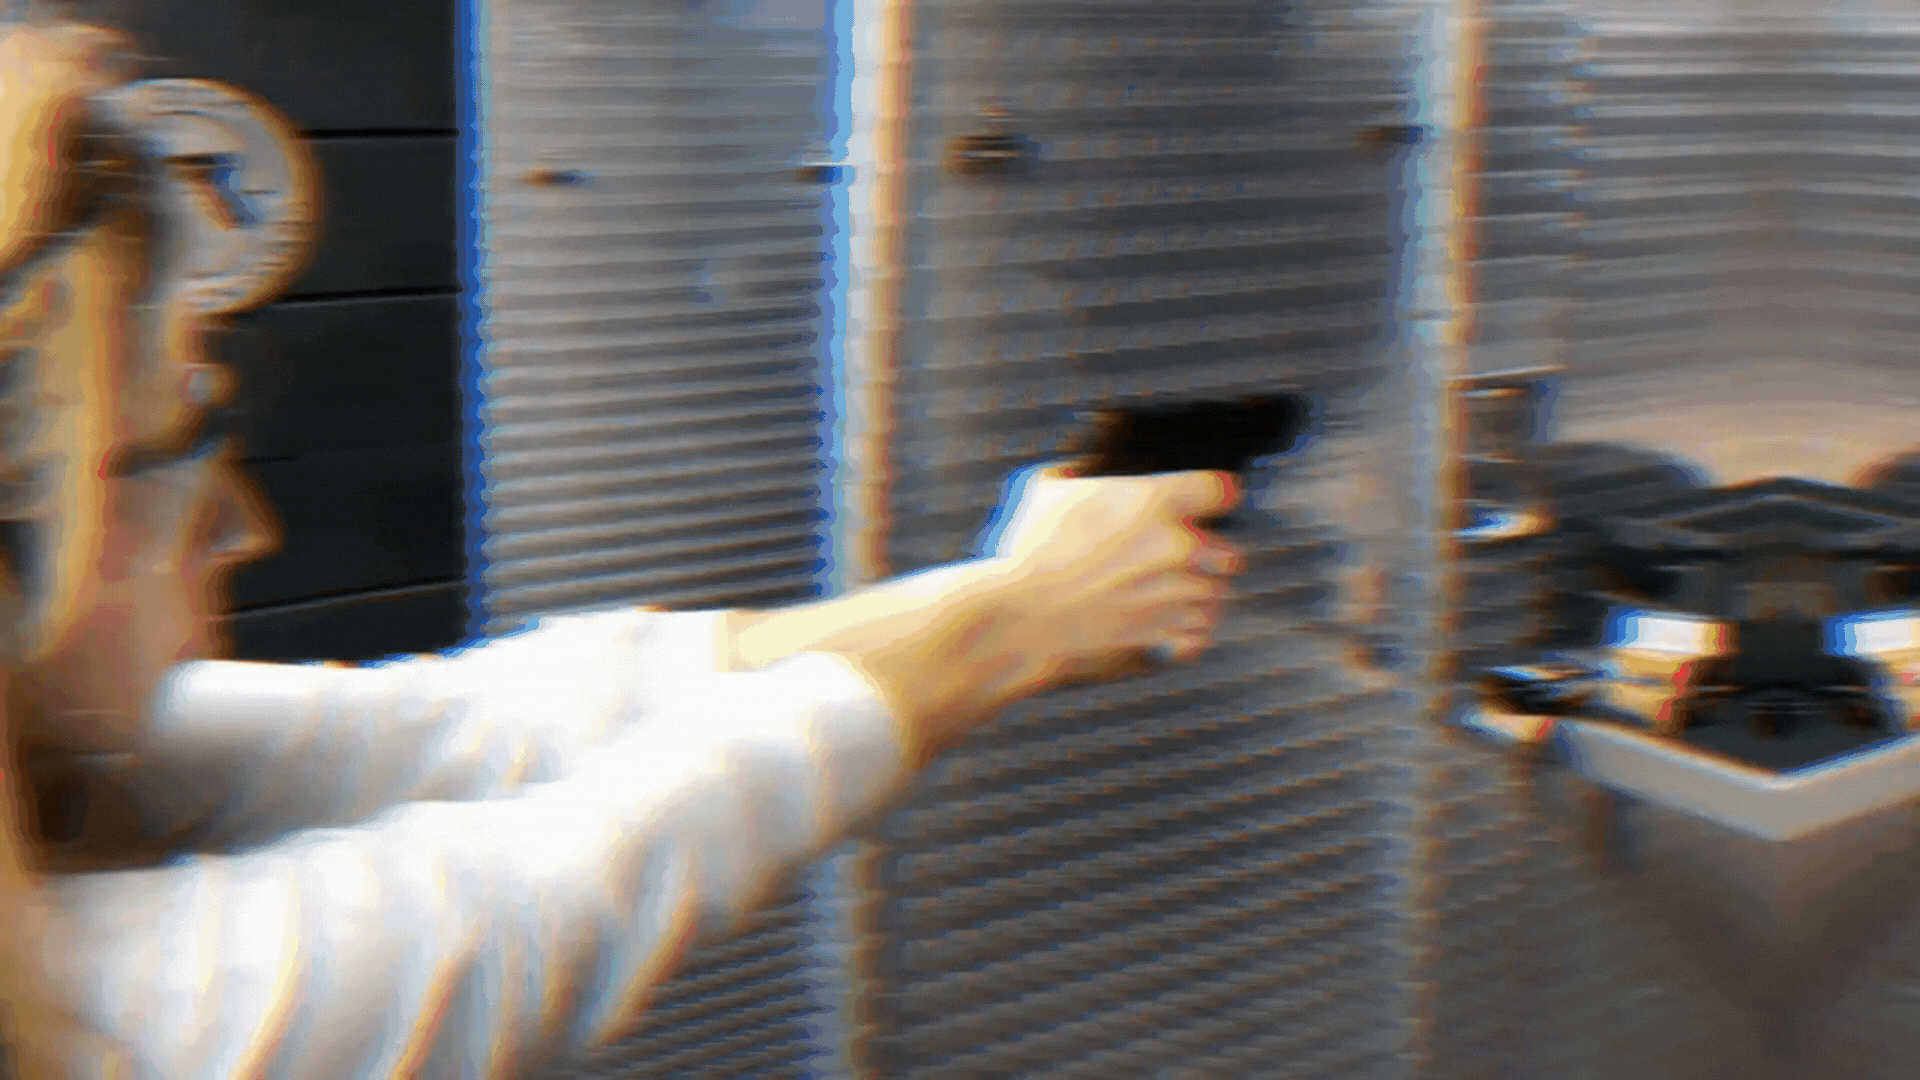 tiffany thomas tampa carry shooting gun at private gun range class